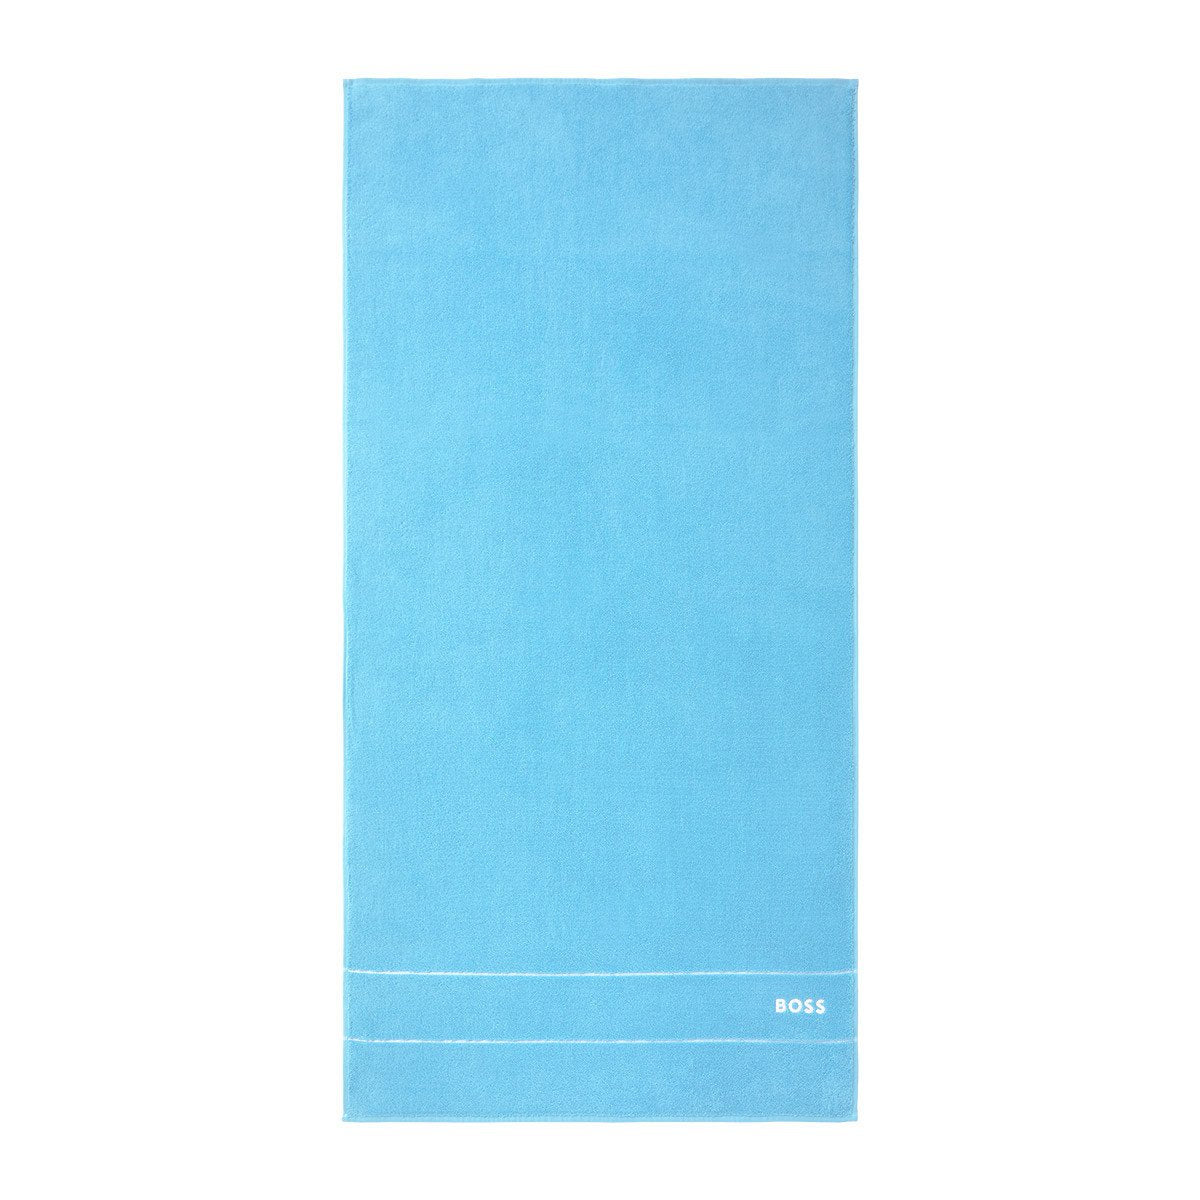 Plain River Blue Terry Cotton Bath Towels by Hugo Boss | Fig Linens